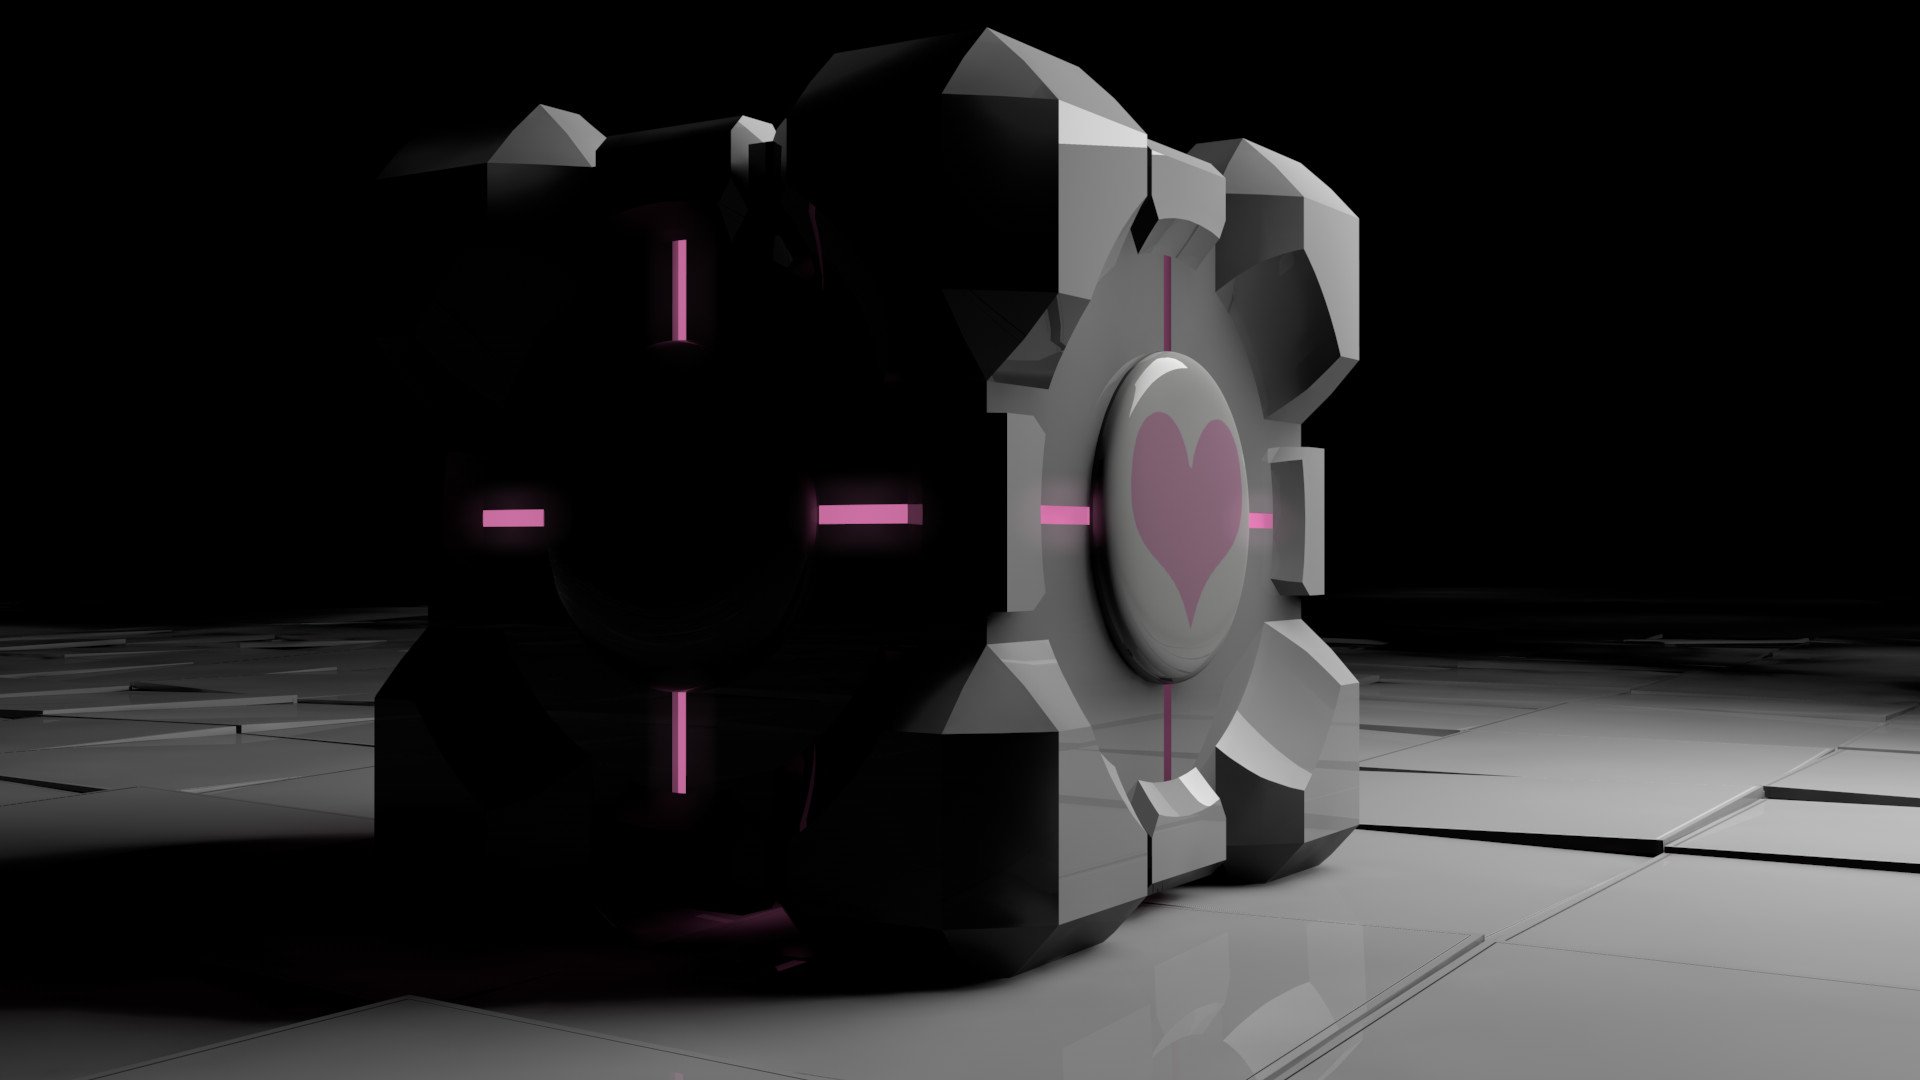 companion cube portal by demonkabuto on deviantart companion cube